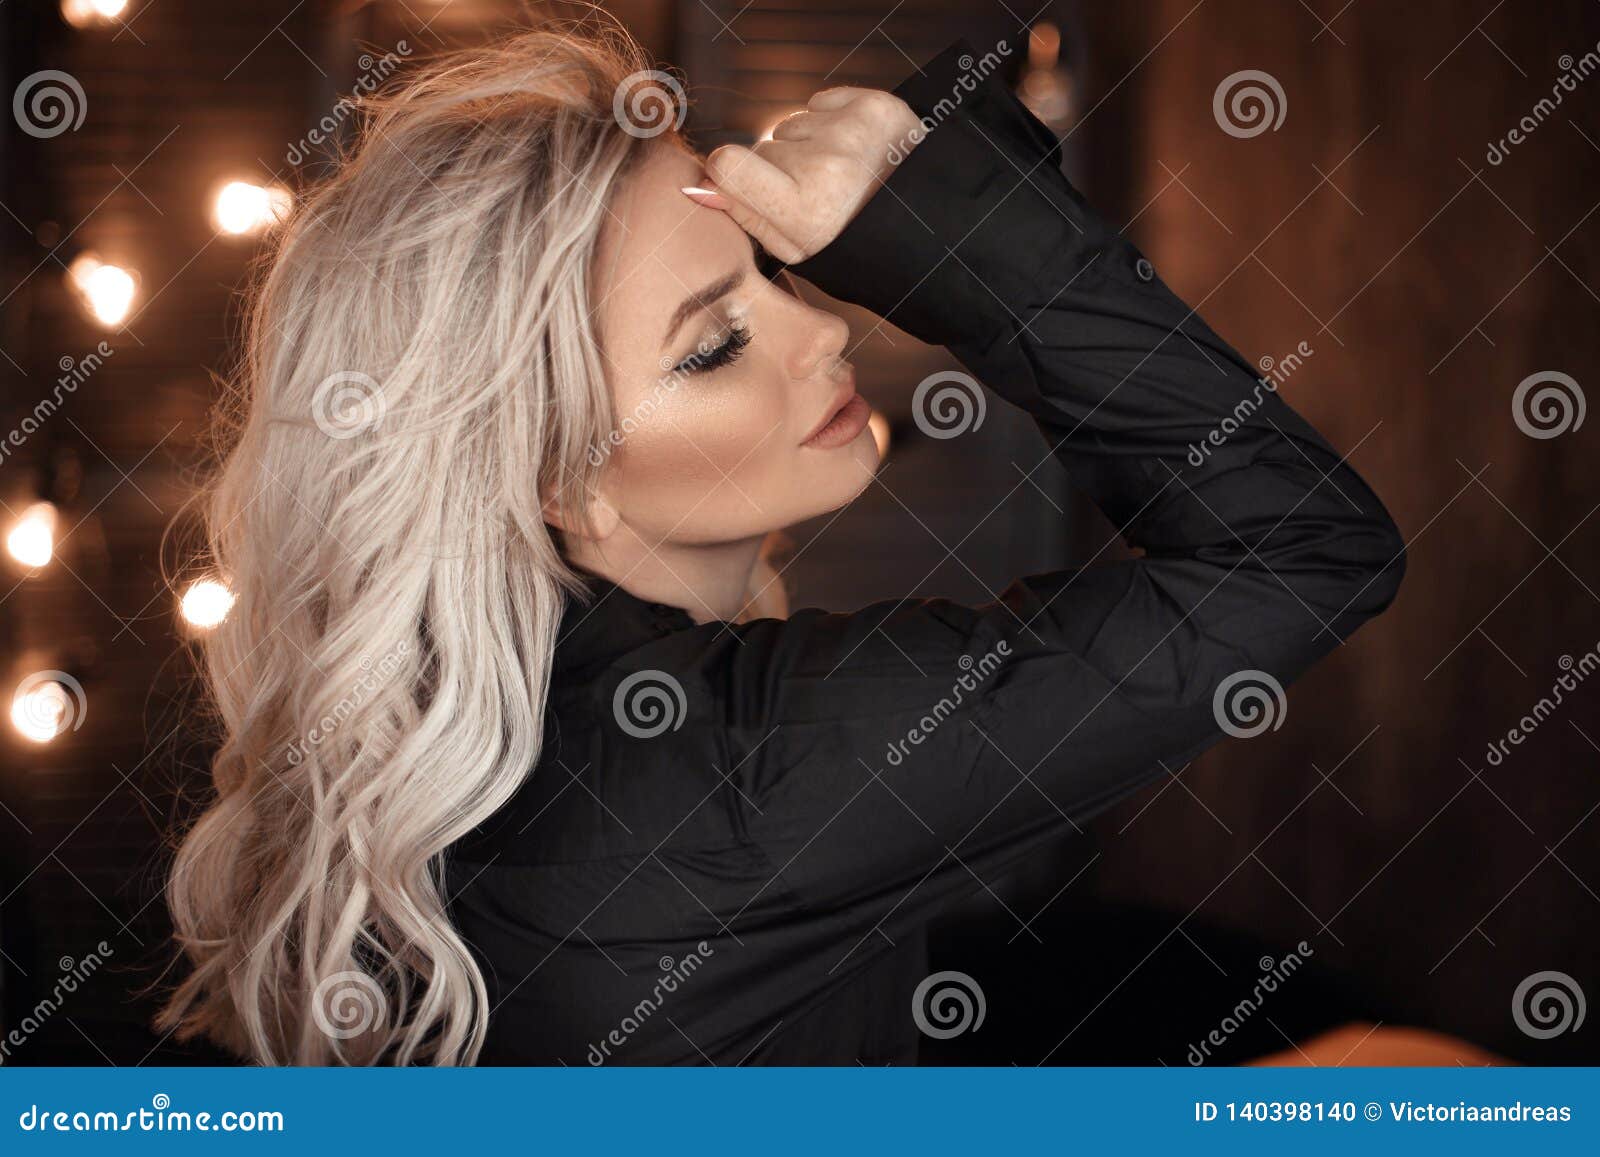 hairstyle. beautiful blonde woman portrait posing in black shirt. fashionable blond girl model over bokeh lights dark background